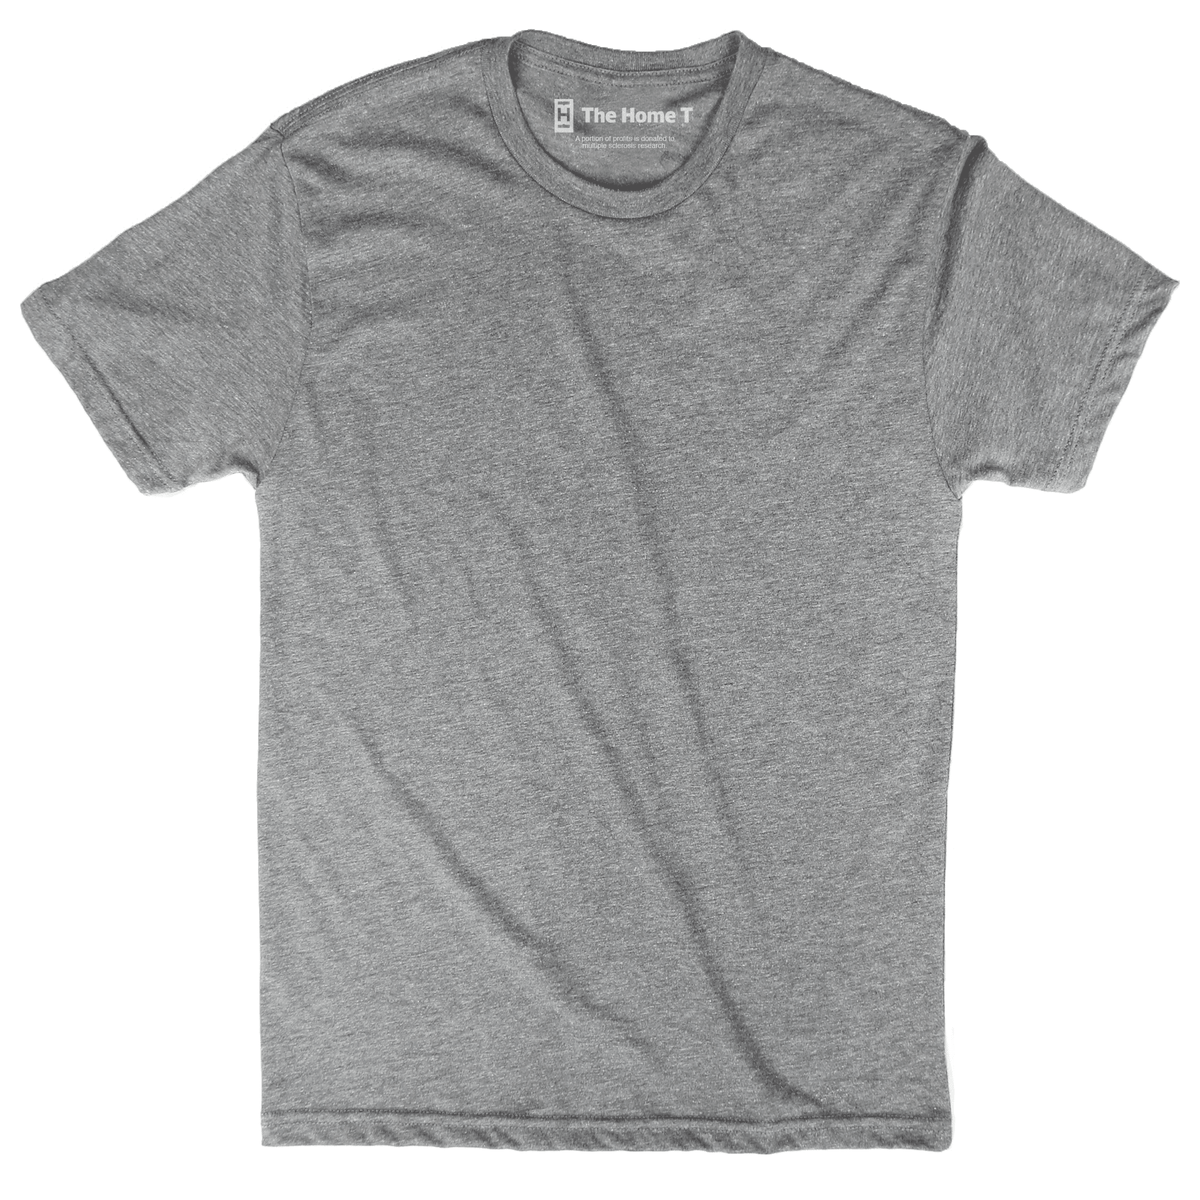 Basics - The Perfect T-shirt, Sweatshirt and Hoodie